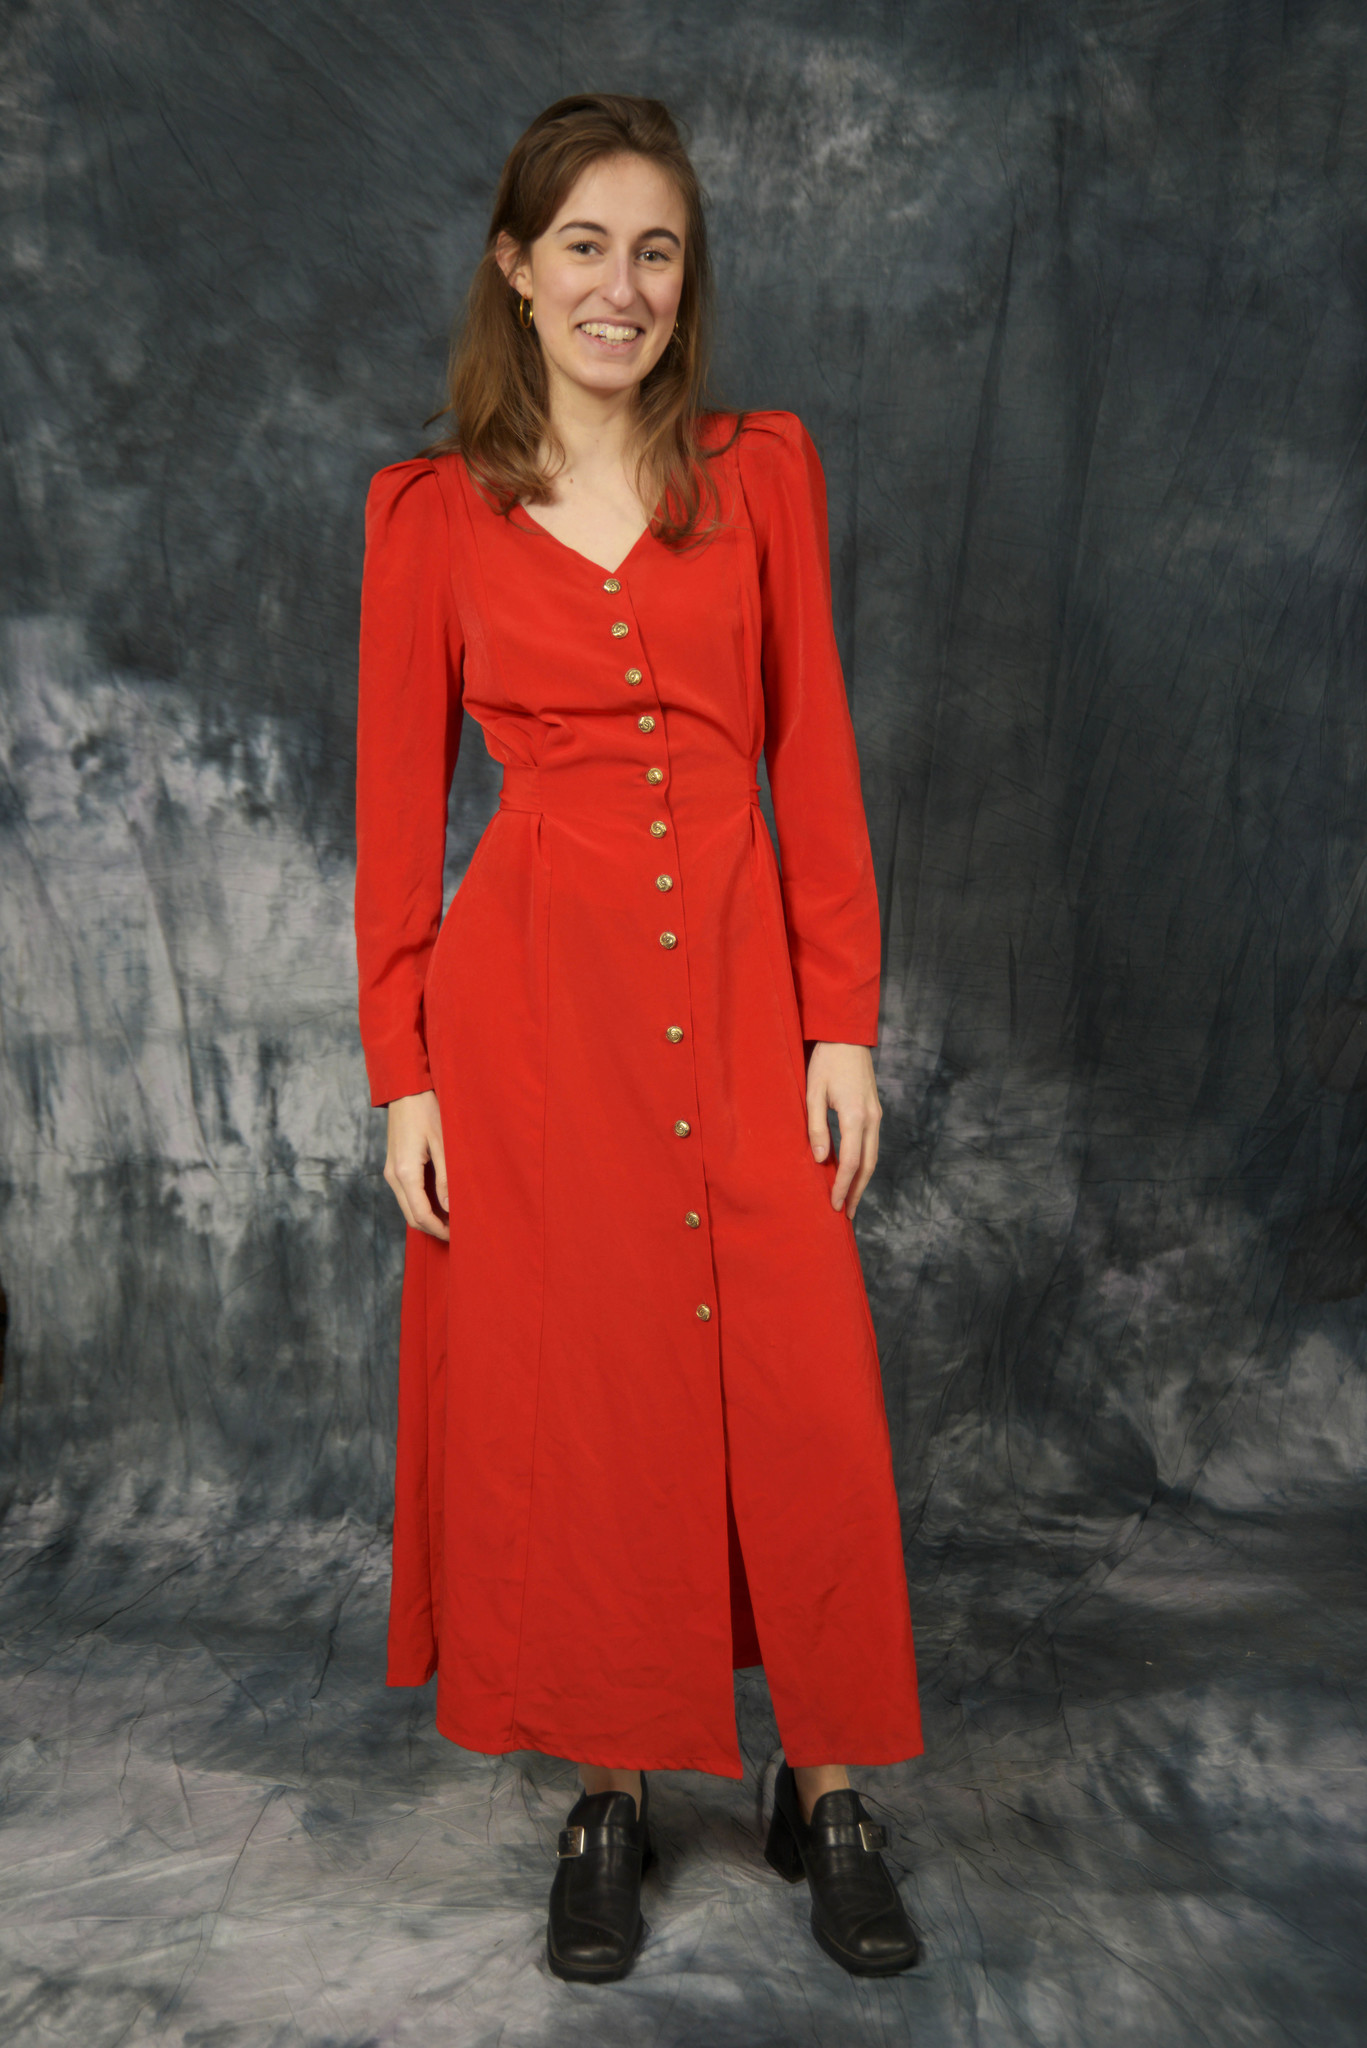 Red 90s maxi dress